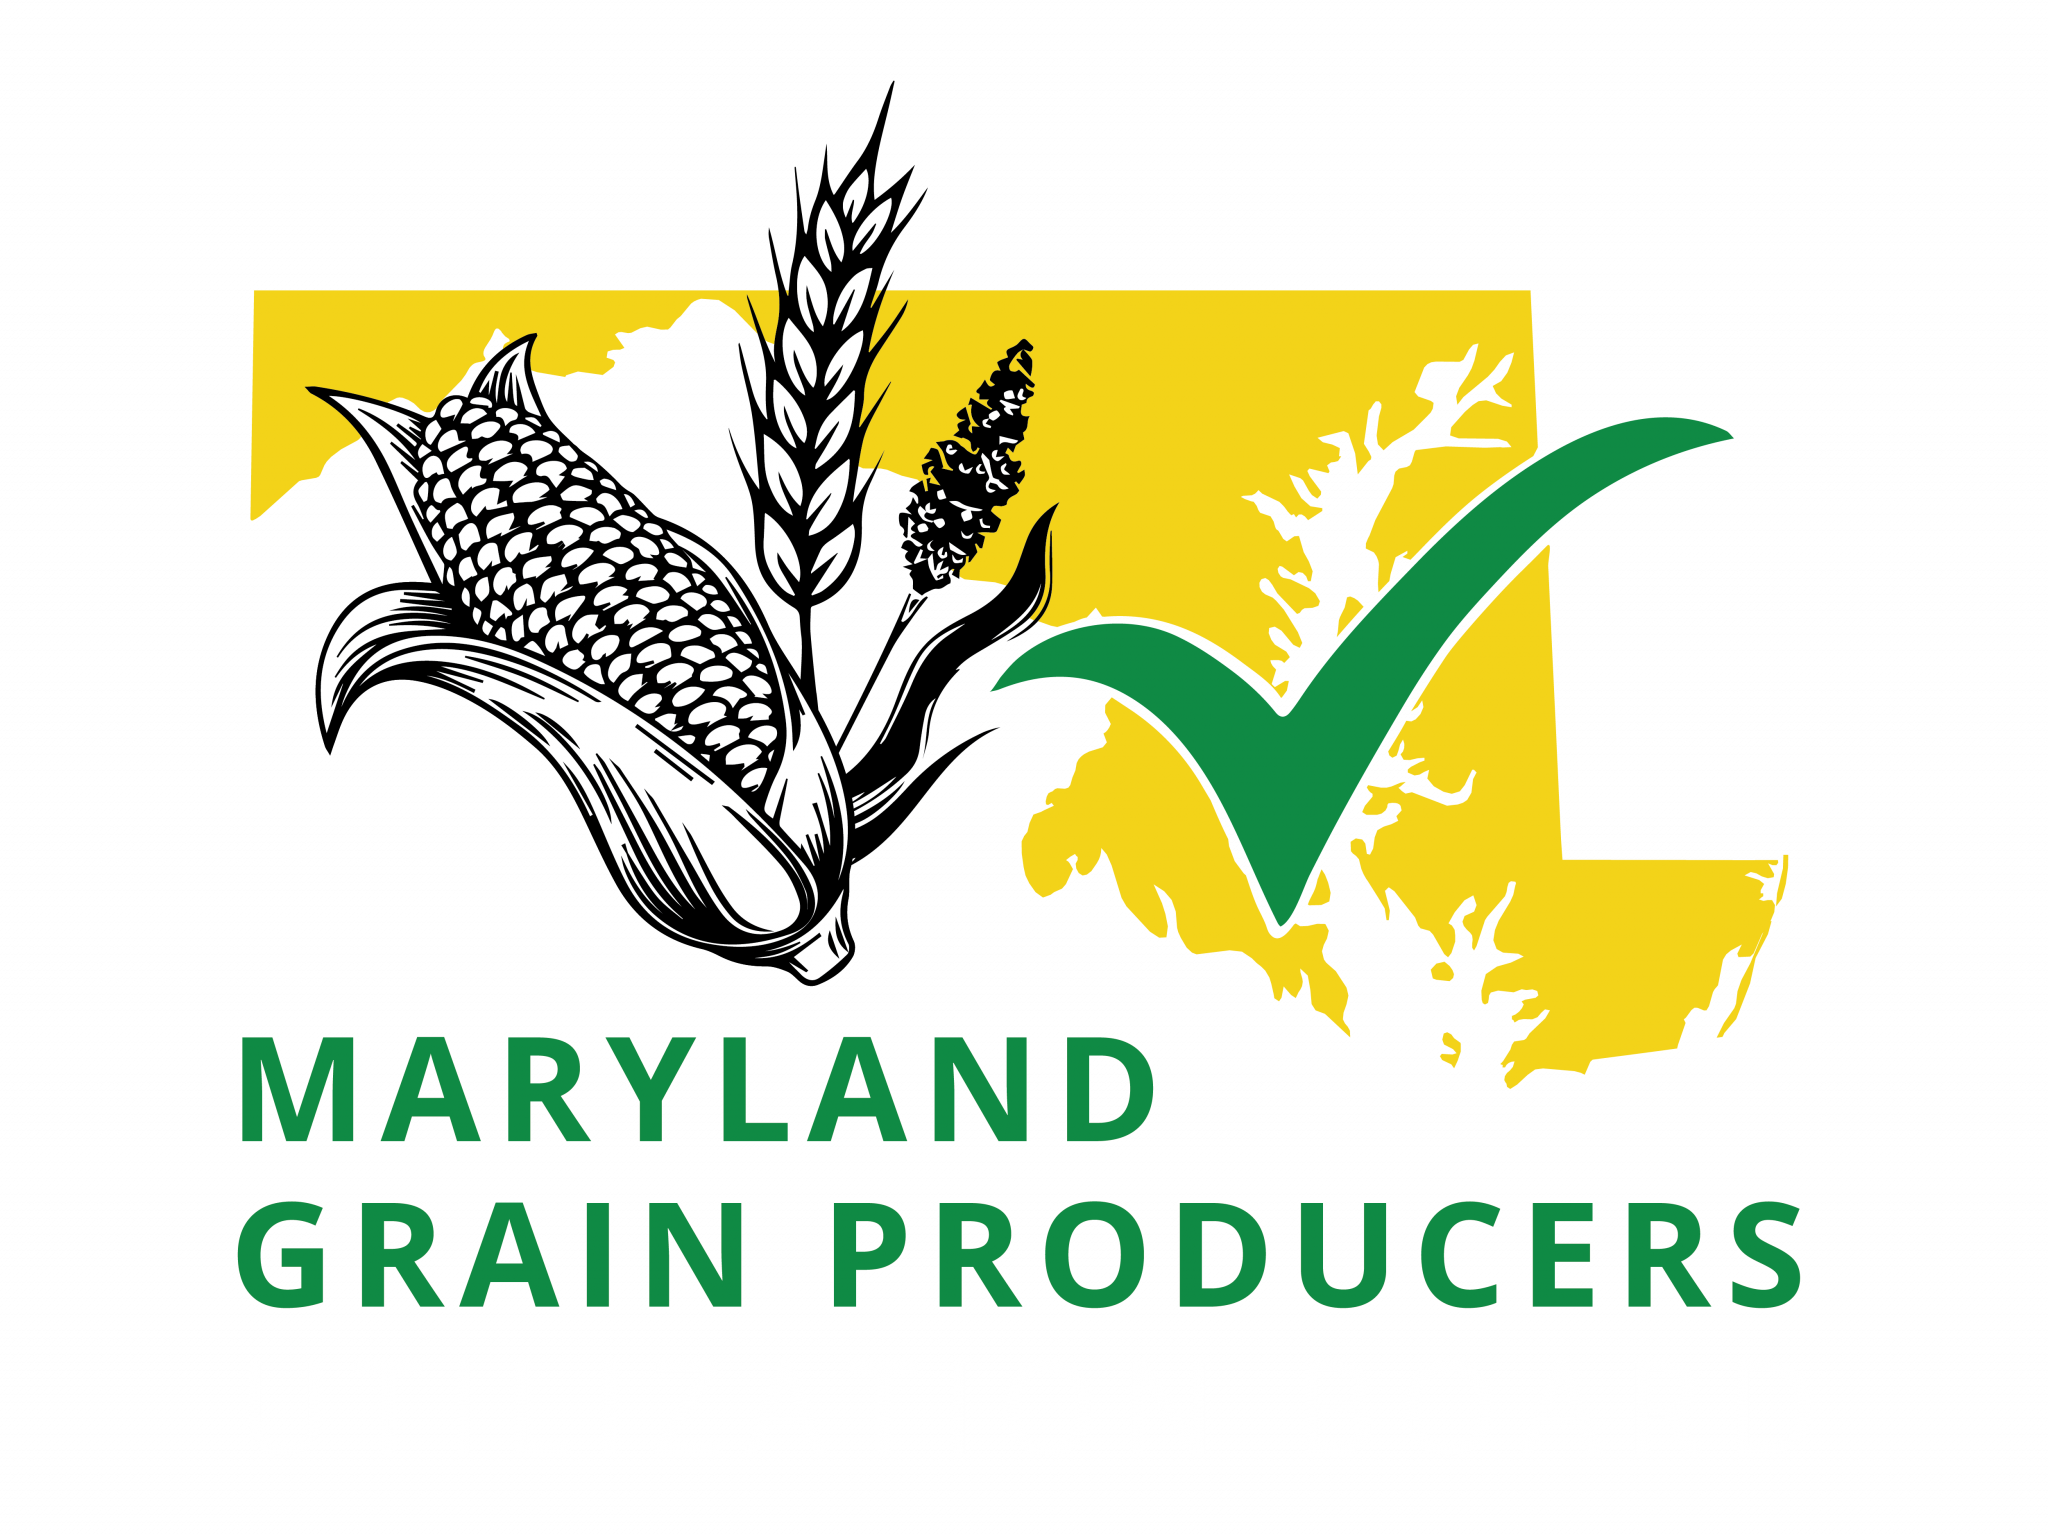 Scholarship – Maryland Grain Producers